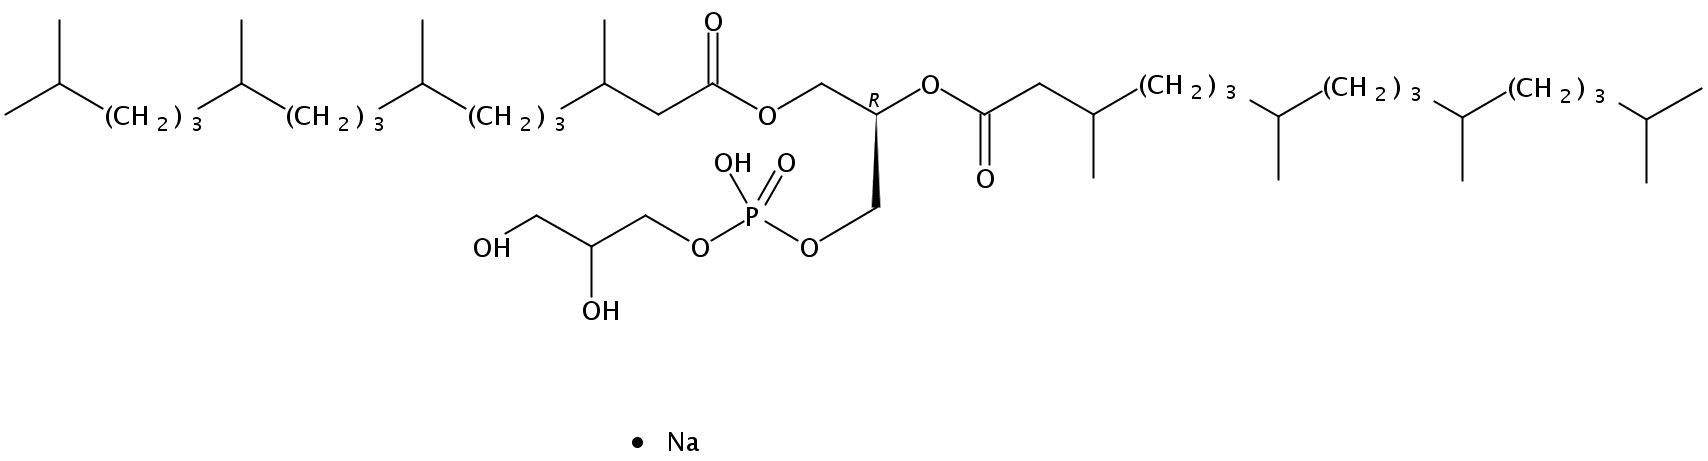 1,2-diphytanoyl-sn-glycero-3-phospho-(1'-rac-glycerol) (sodium salt)